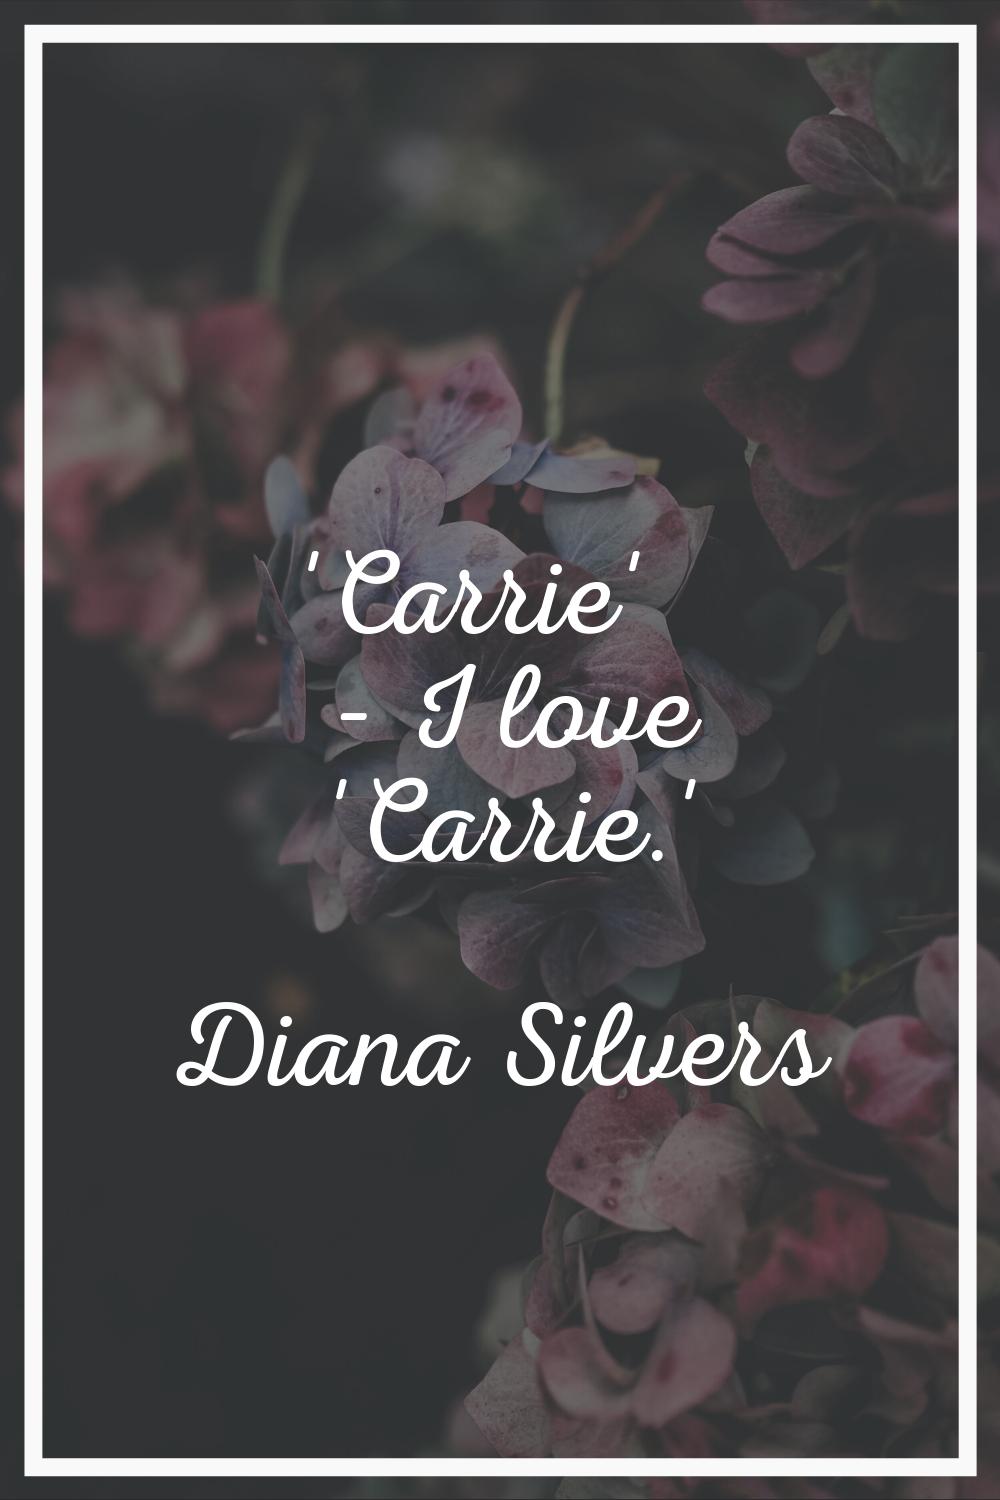 'Carrie' - I love 'Carrie.'